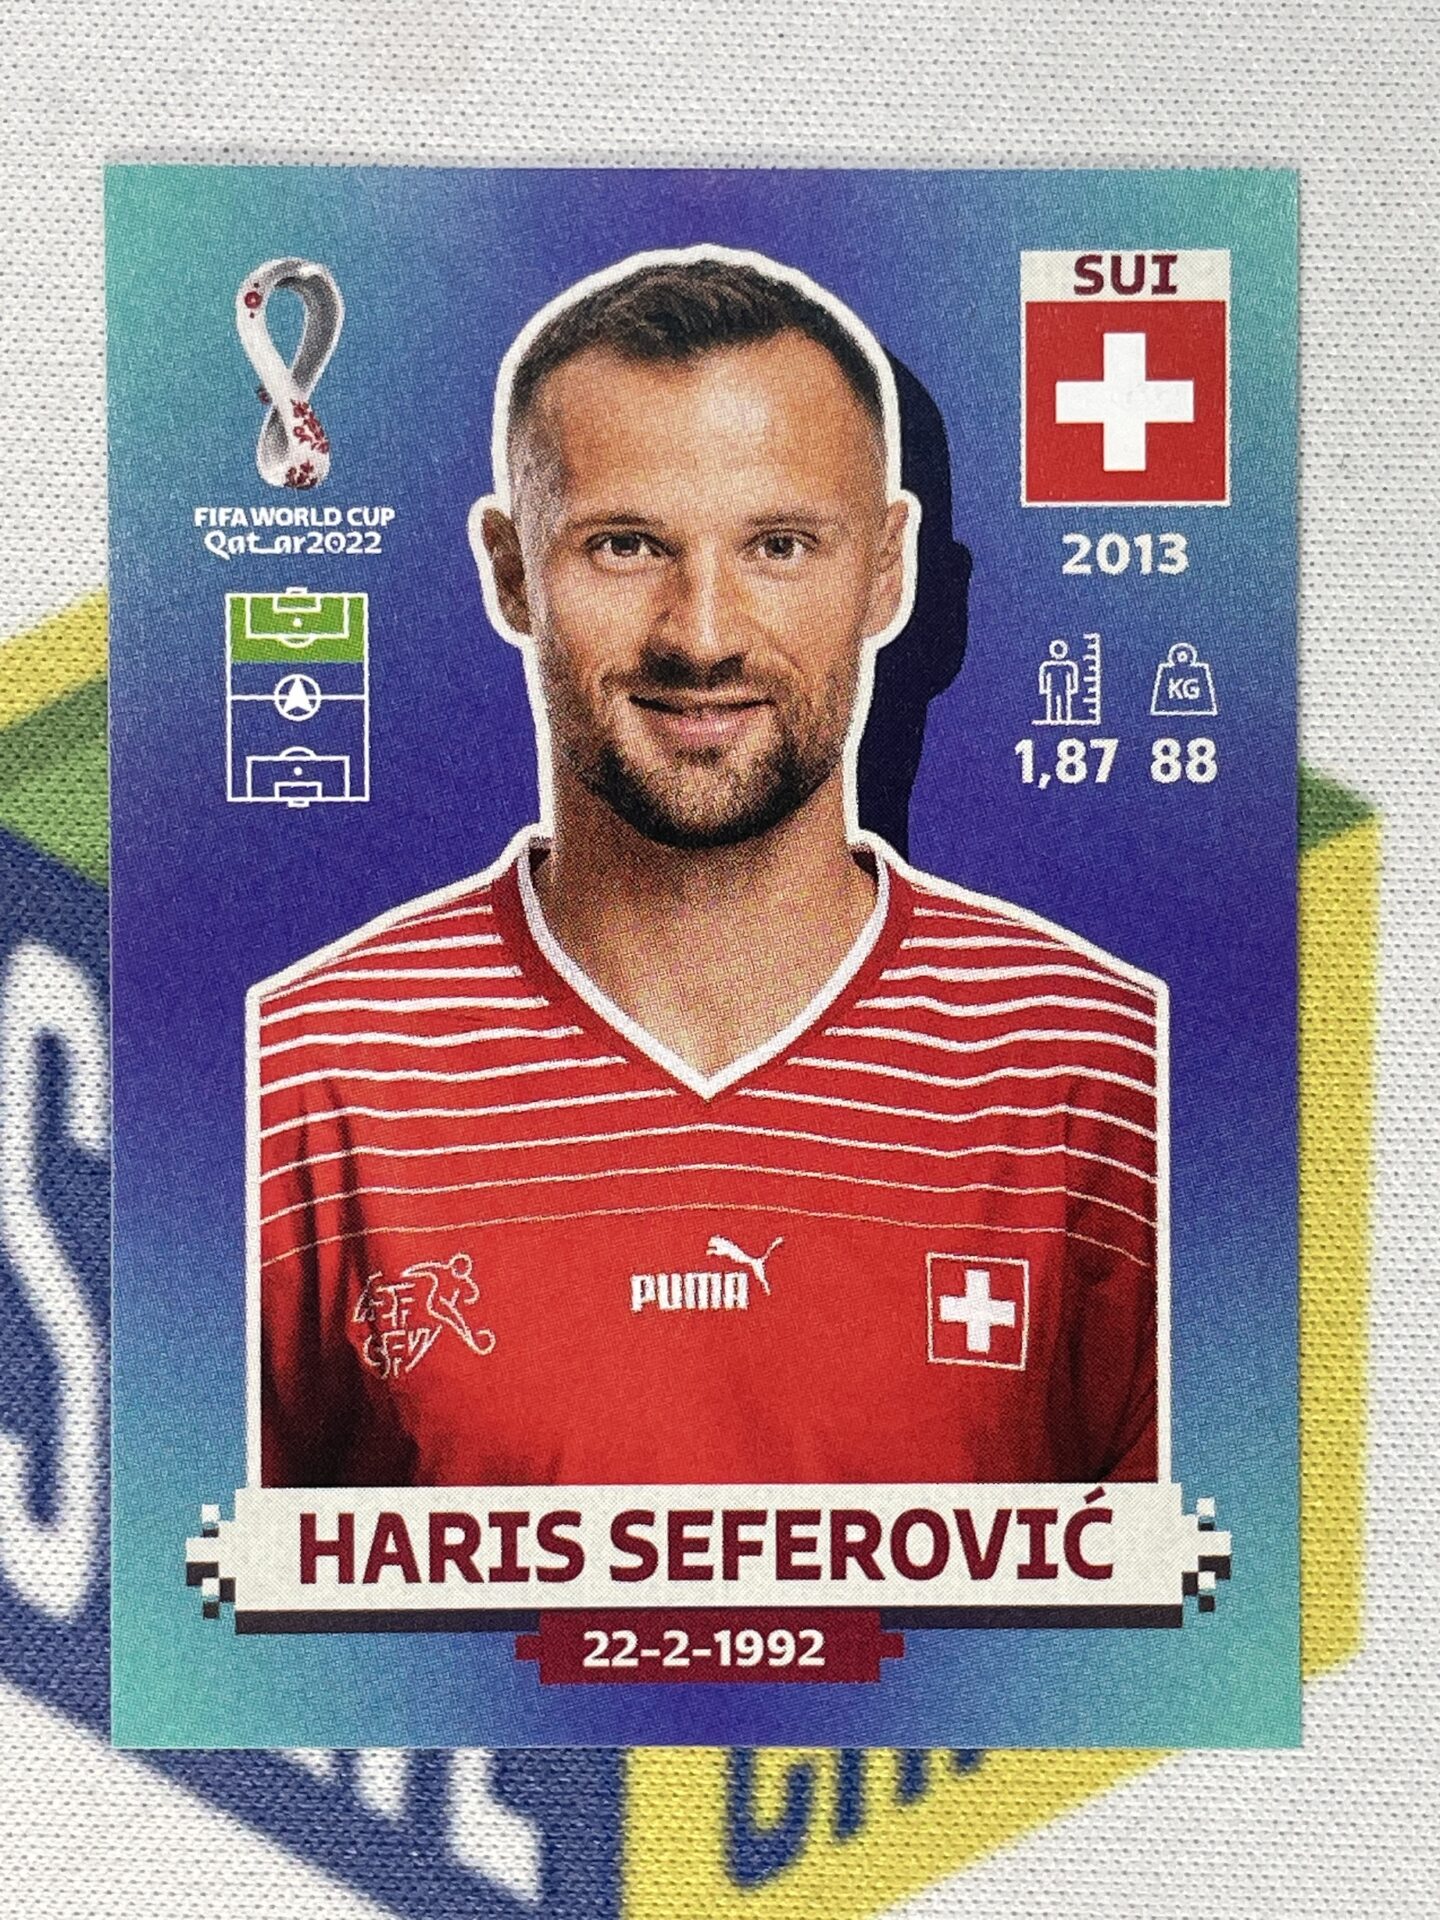 Haris Seferović's famous Switzerland shirt